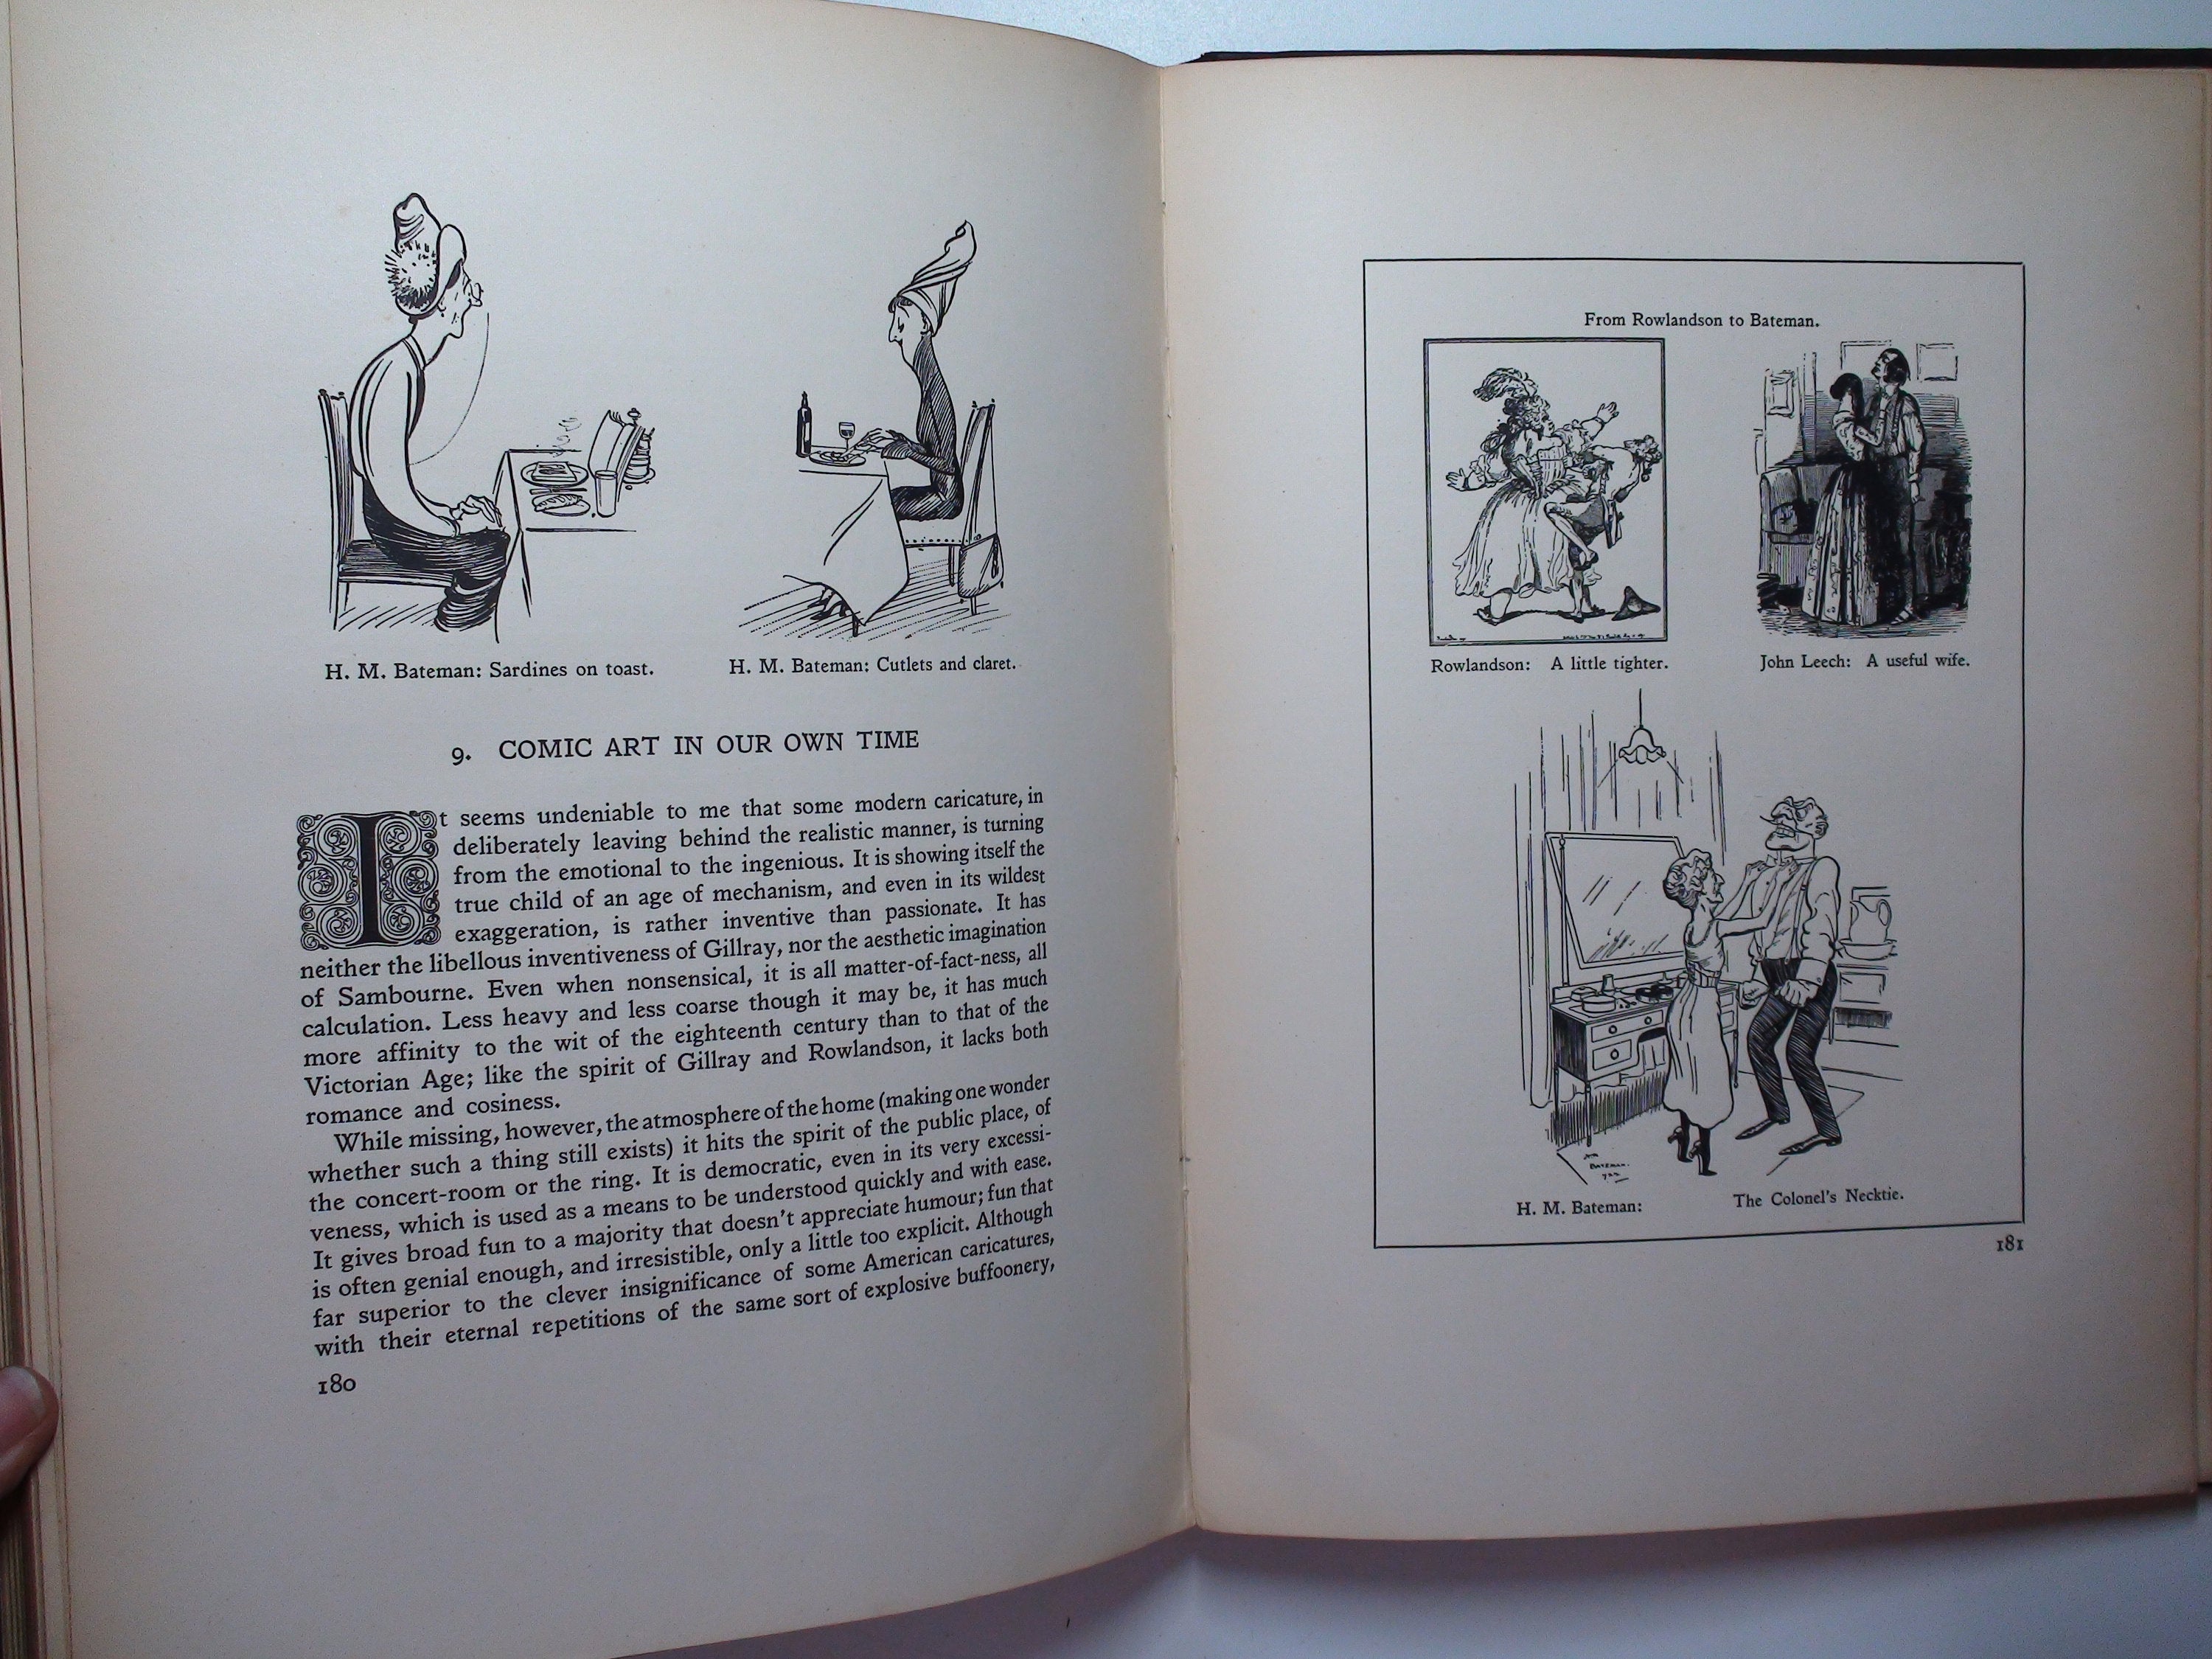 Comic Art in England, by Cornelis Veth, Illustrated, 1930